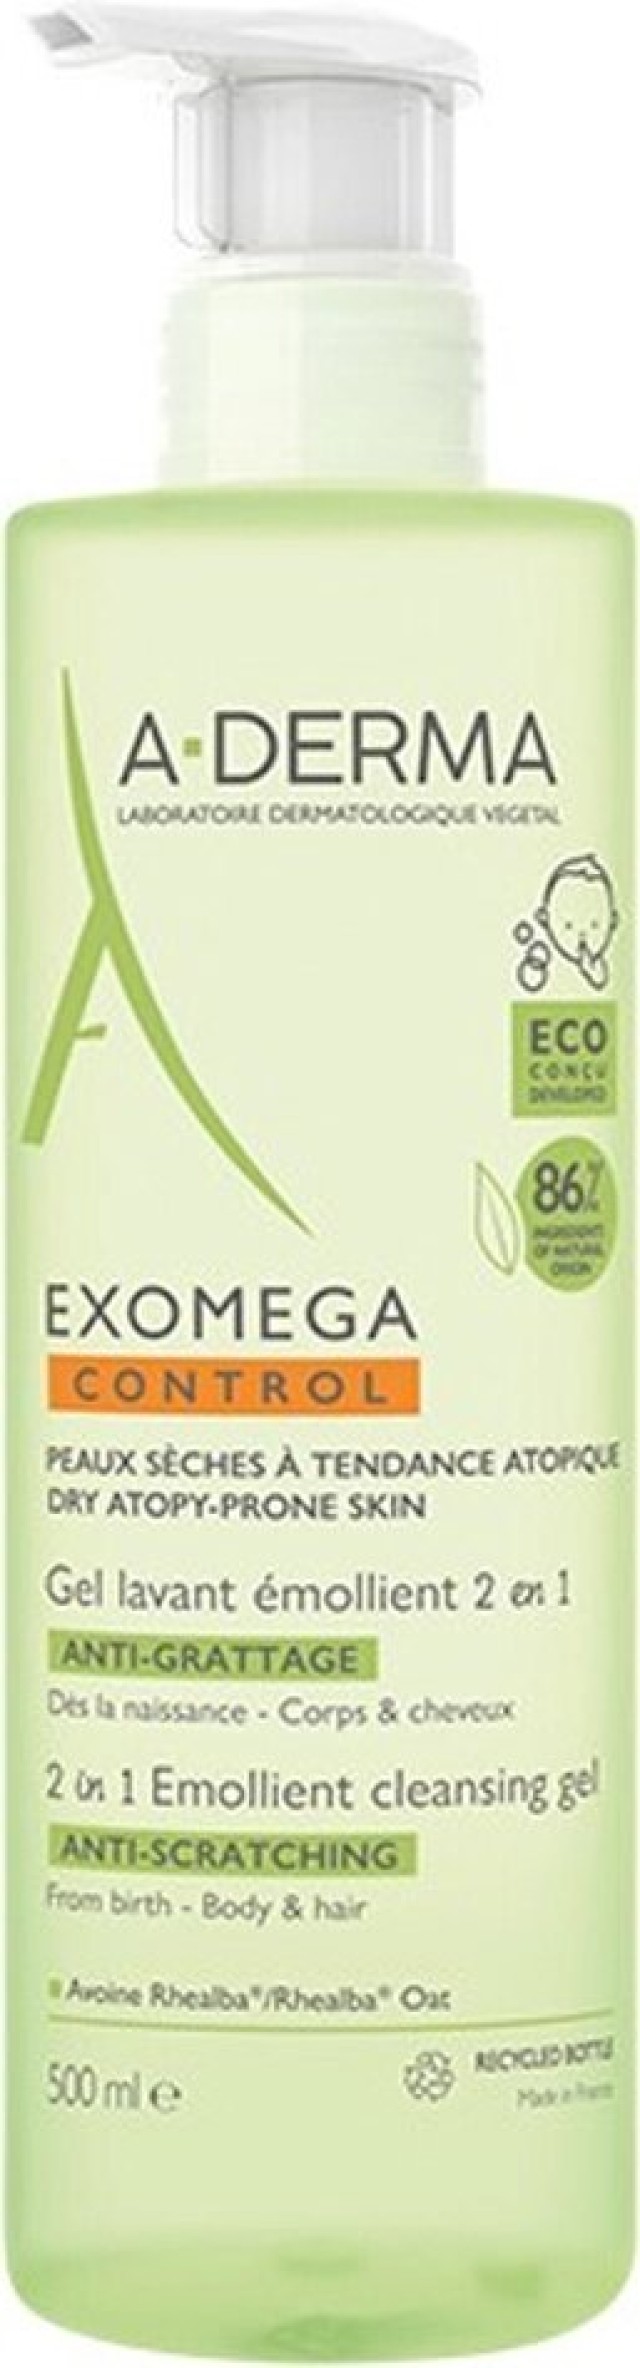 A-Derma Exomega Control Emollient Cleansing Gel 2 in 1 500ml